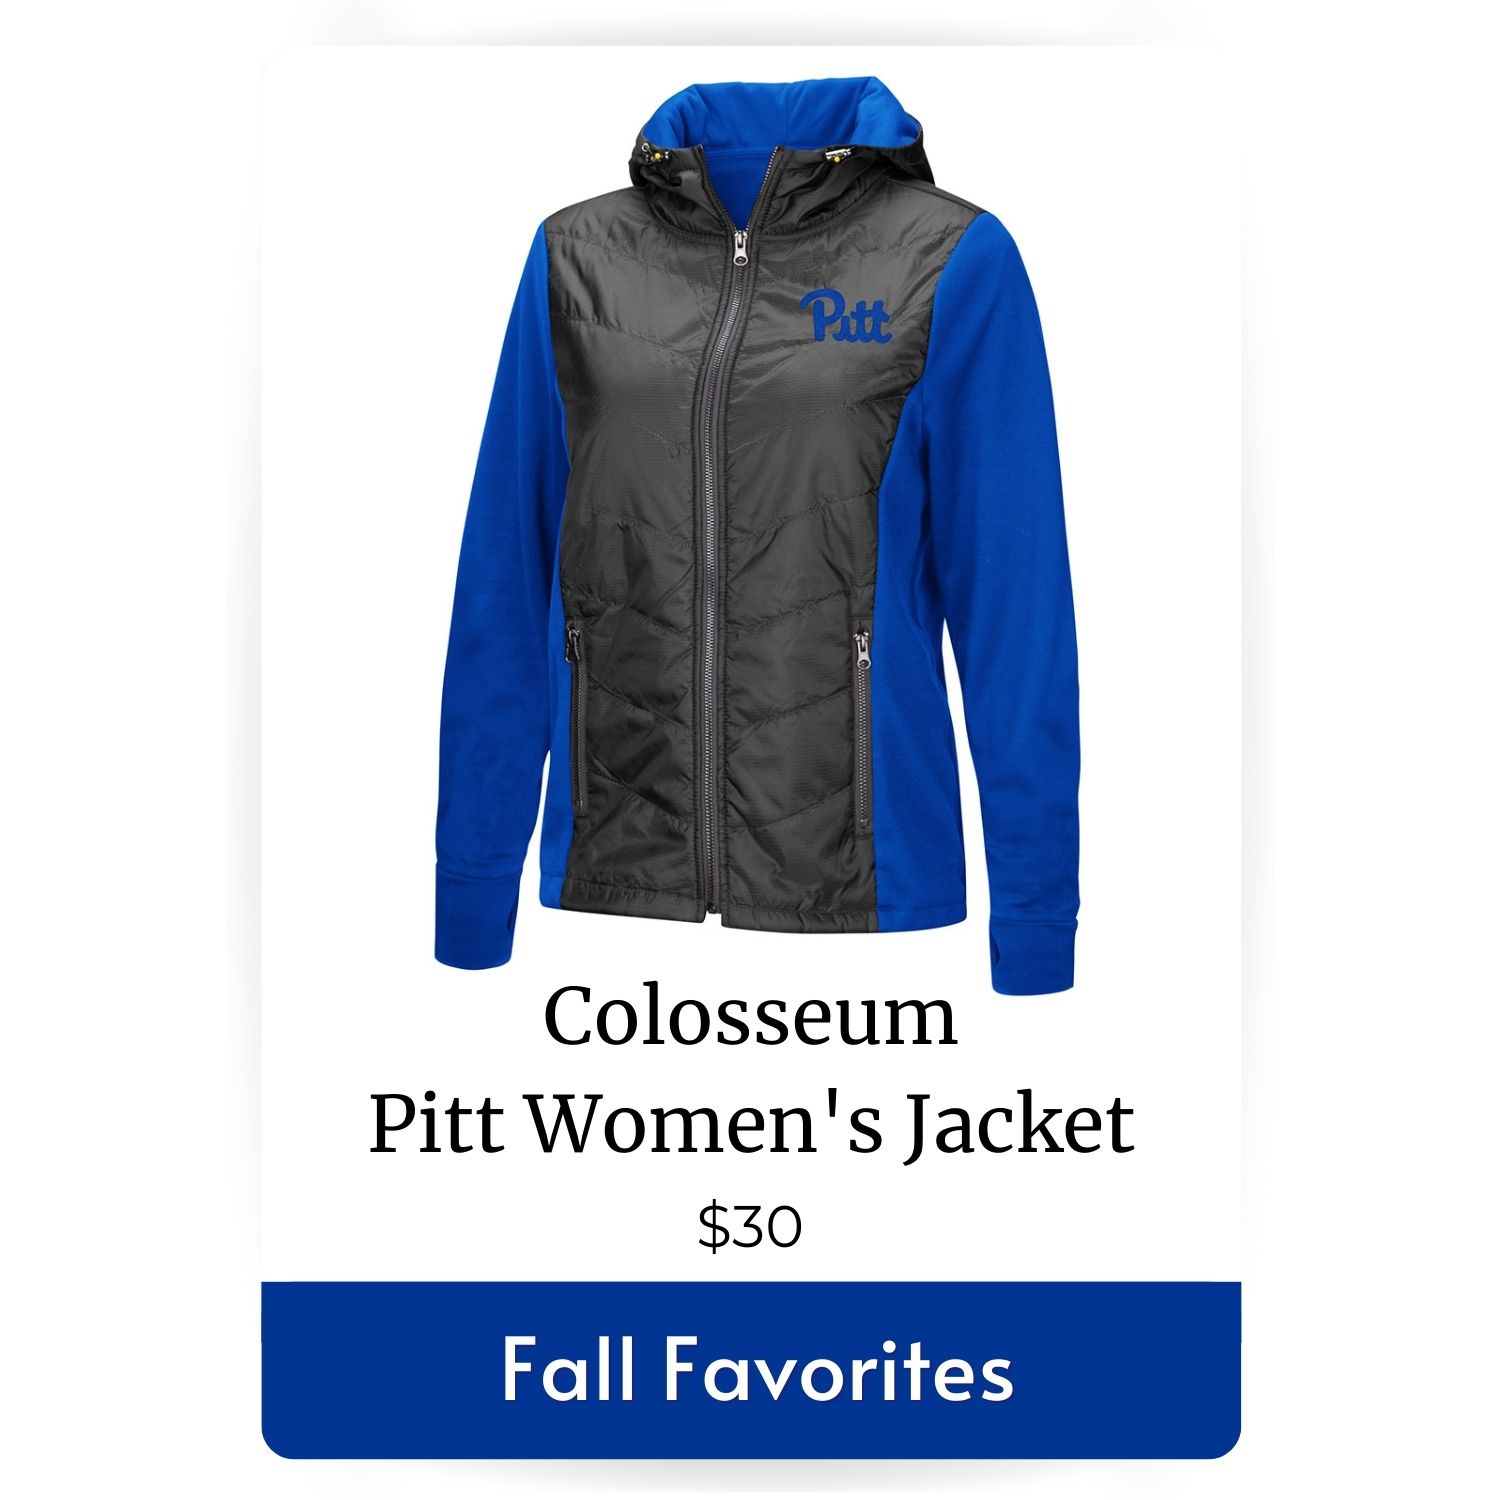 Colosseum Pitt Women's Jacket image